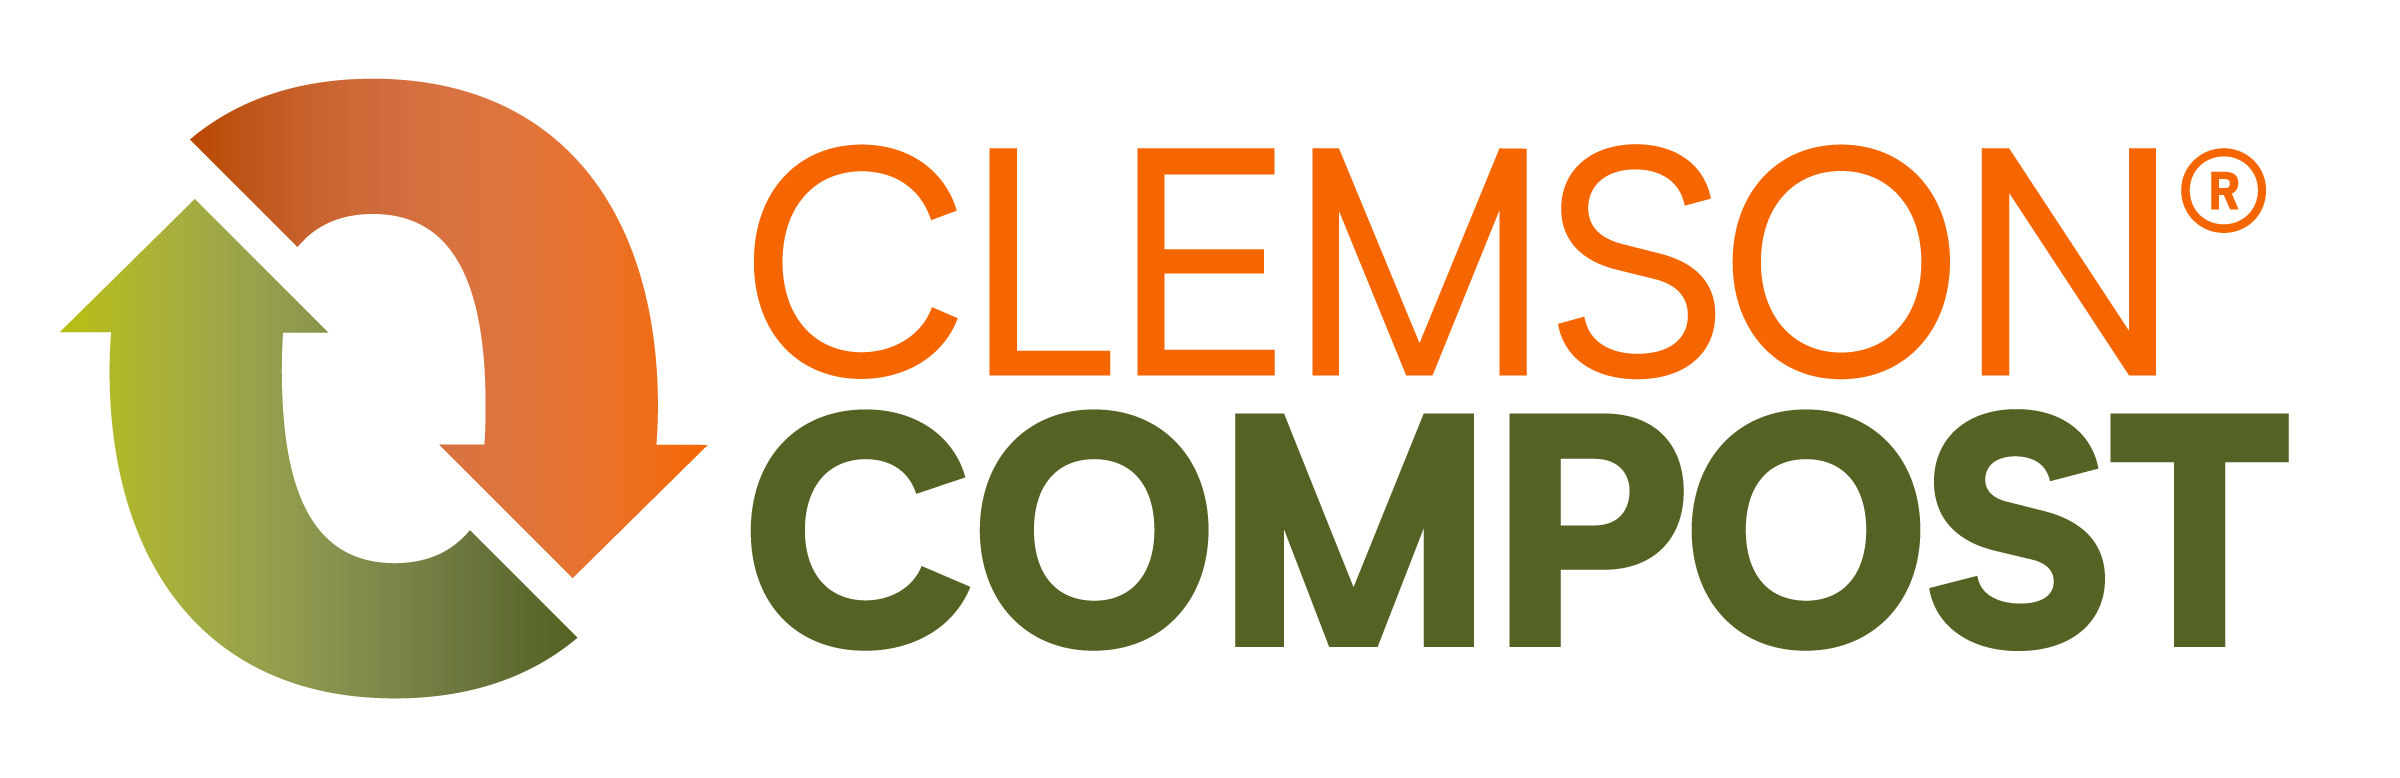 Clemson Compost Logo